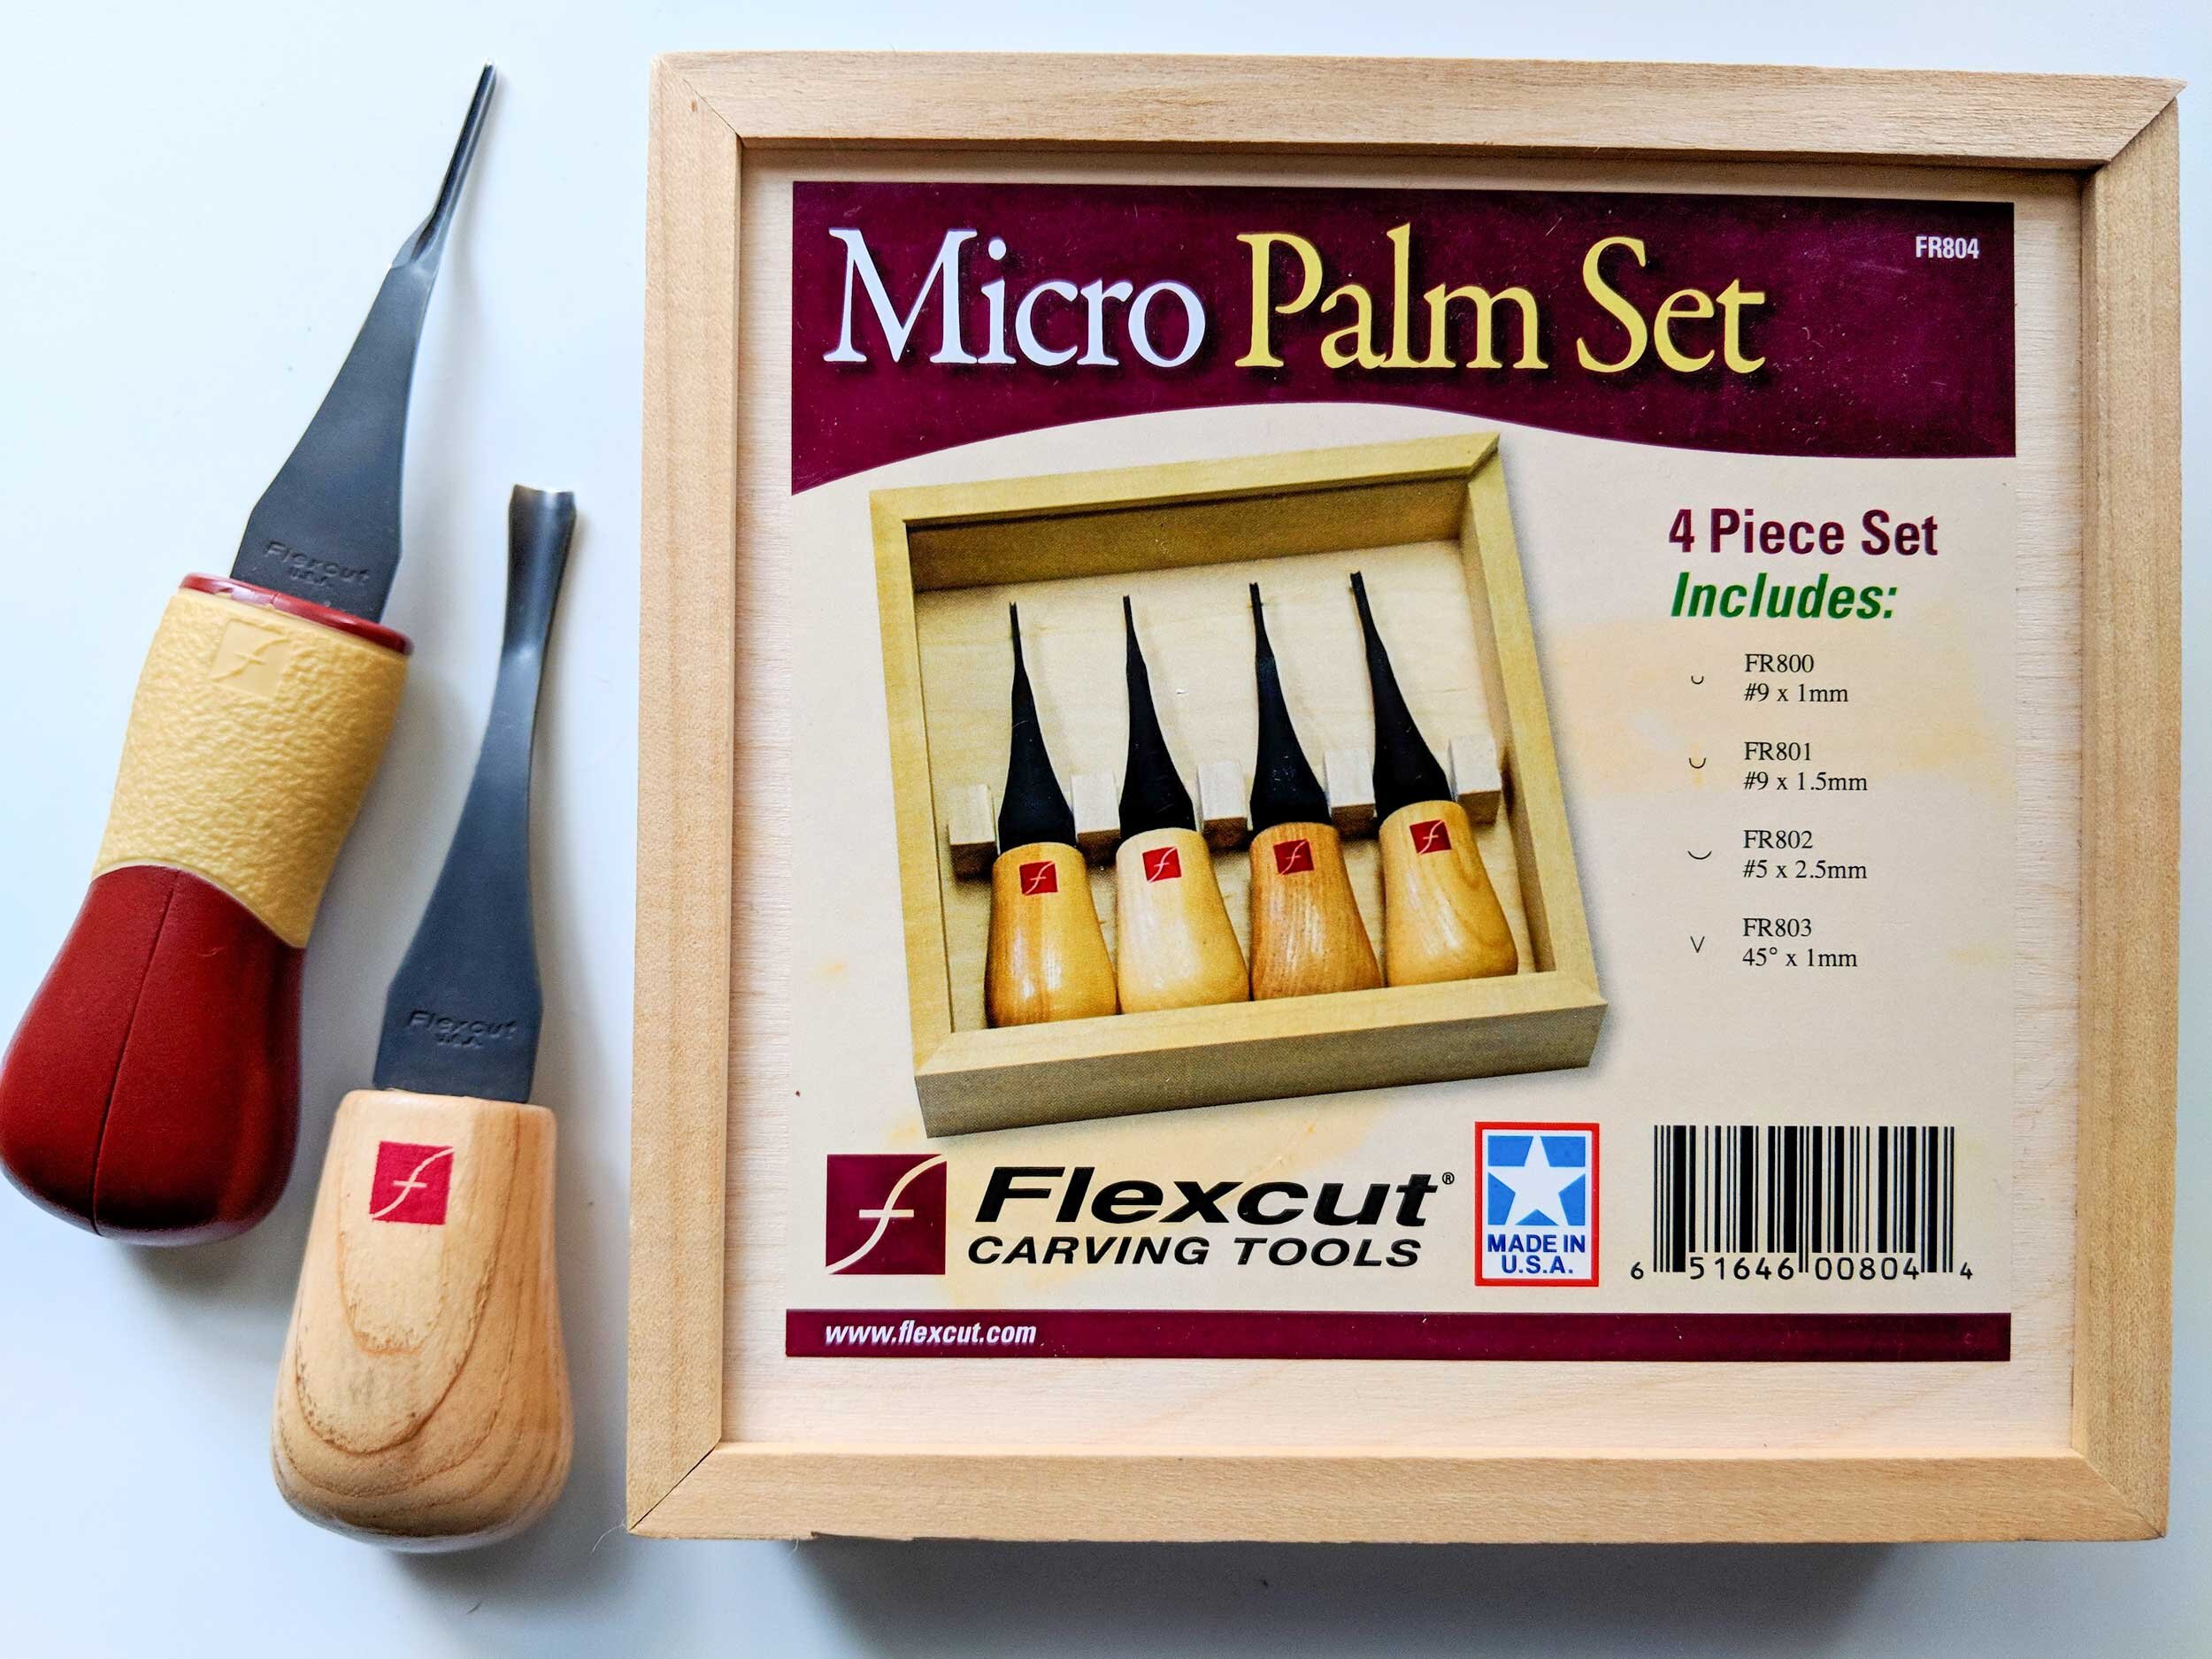 jeanette-small_equipment_flexcut-micro-palm-set-carving-tools.jpg